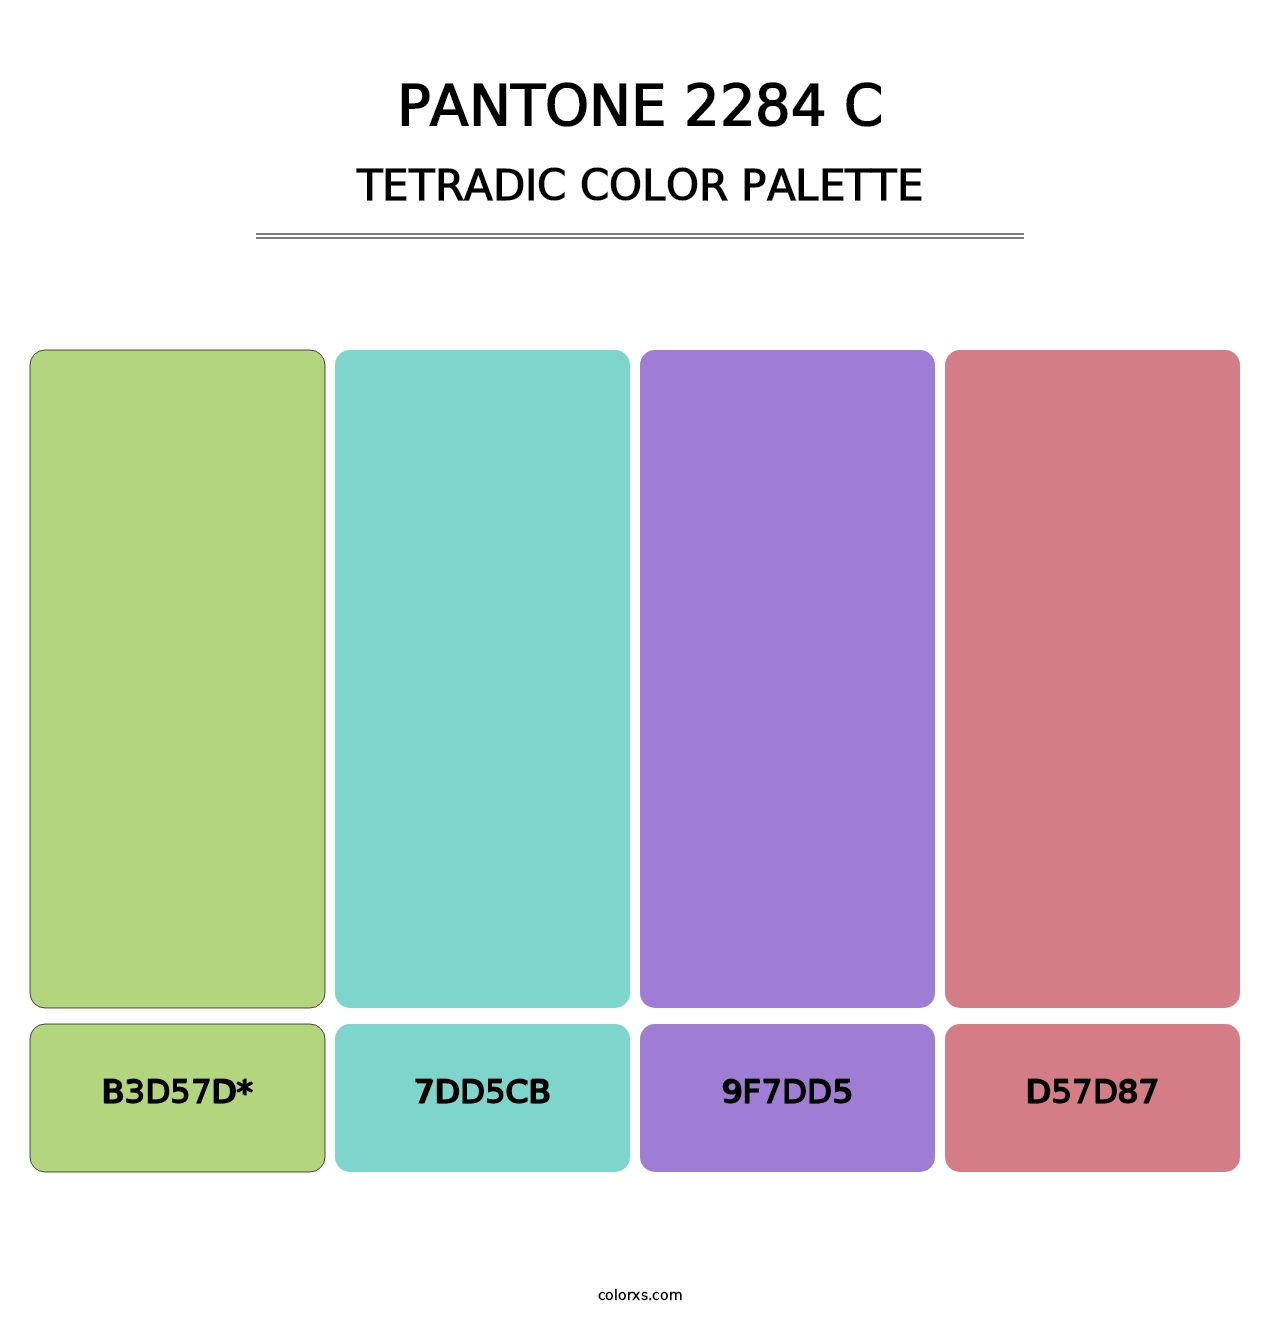 PANTONE 2284 C - Tetradic Color Palette